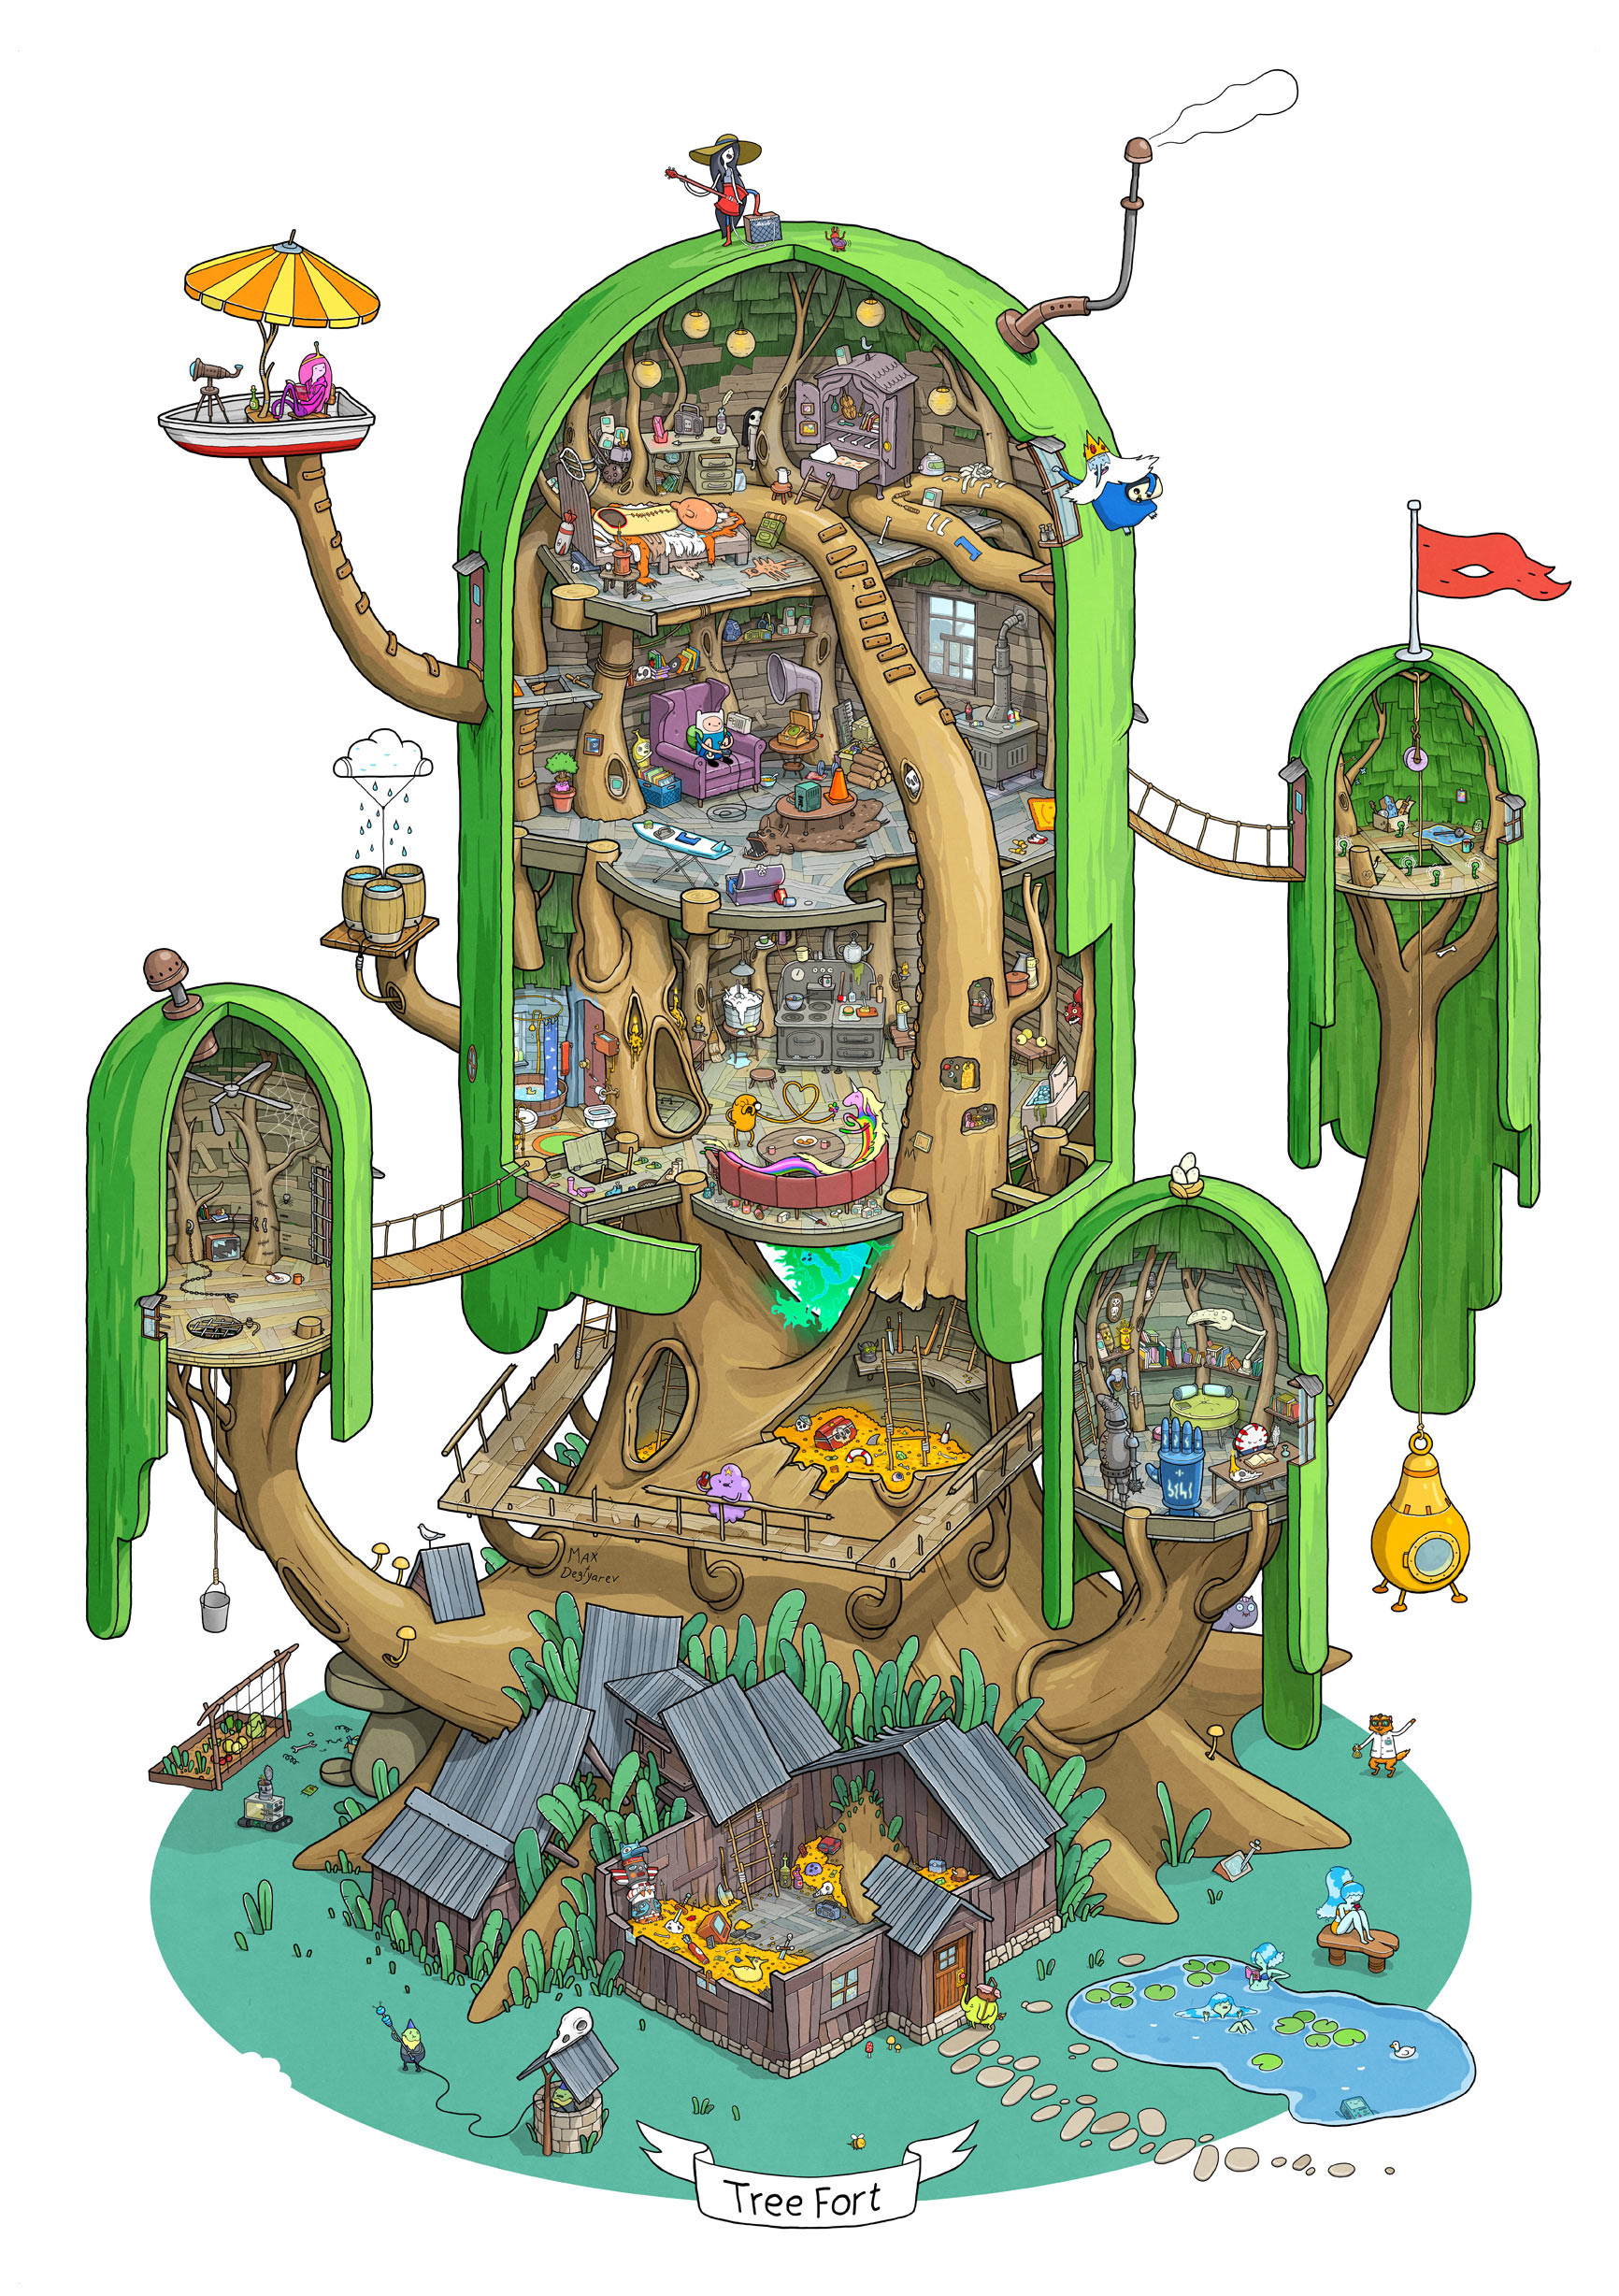 Fine Art: A Very Detailed Look Inside Finn & Jake’s House From Adventure Time